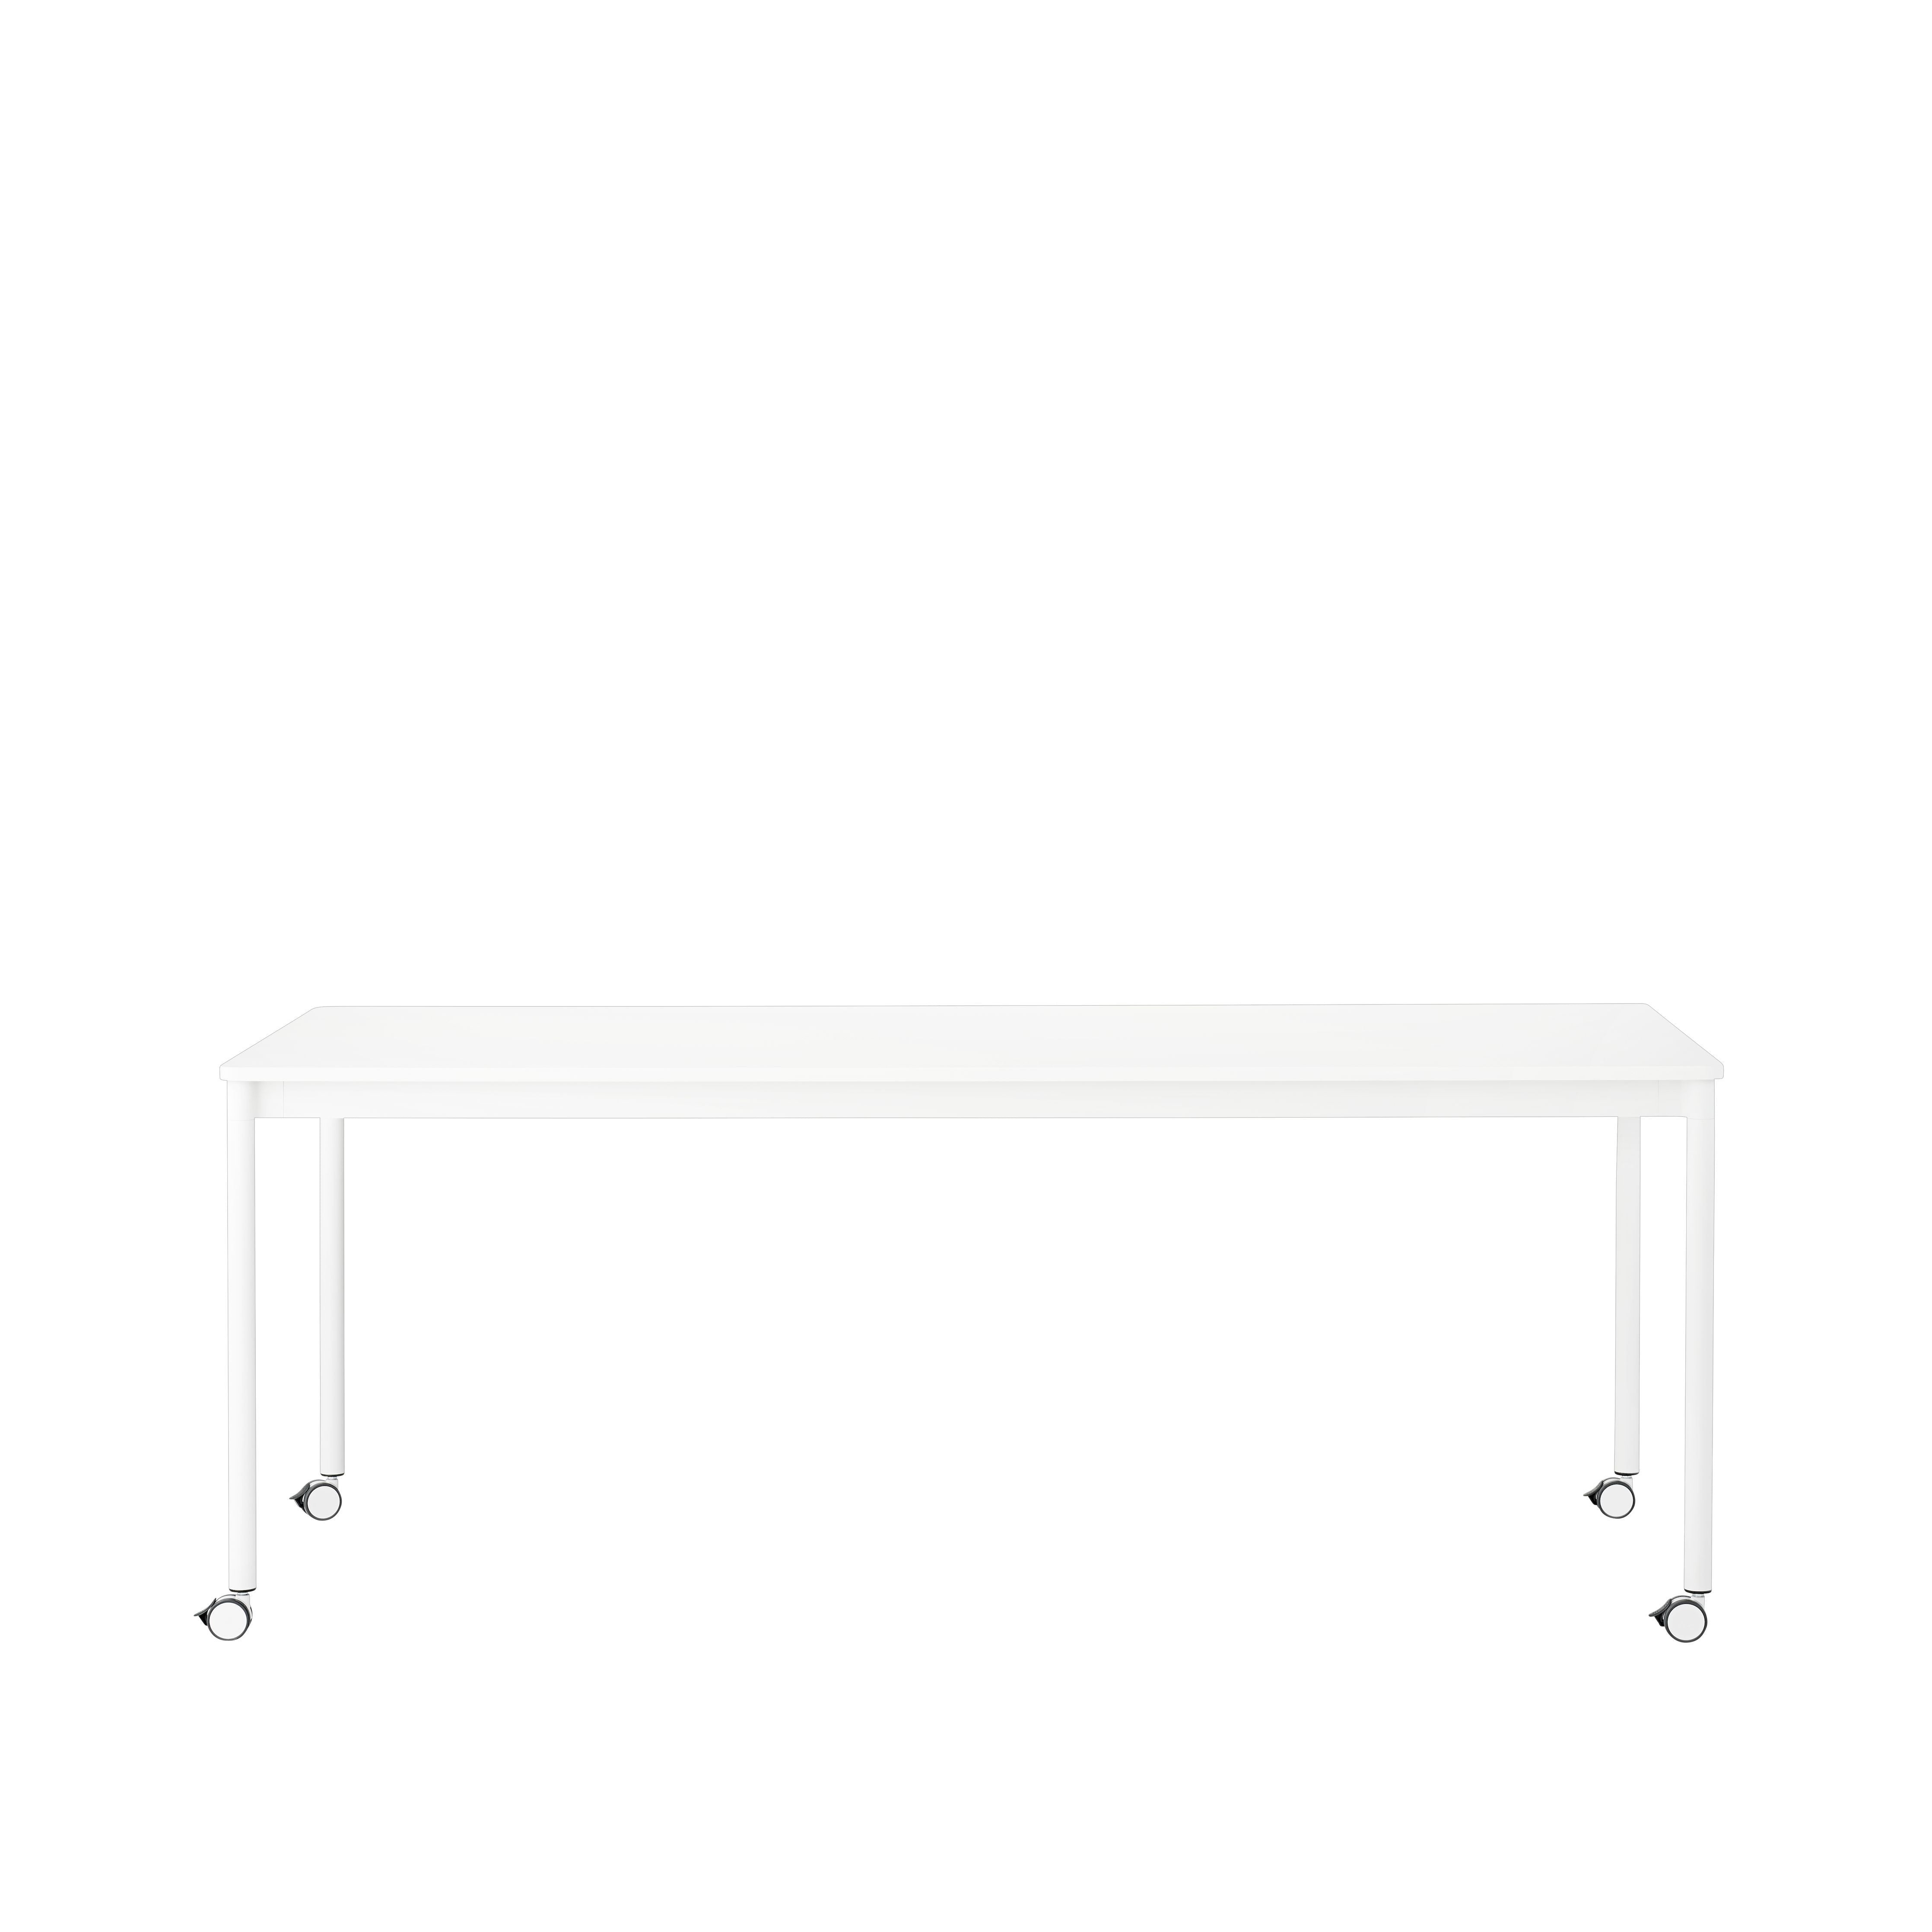 MUUTO BASE HIGH TABLE M. Rolls 190x85x105 cm, bílý laminát/bílý rám